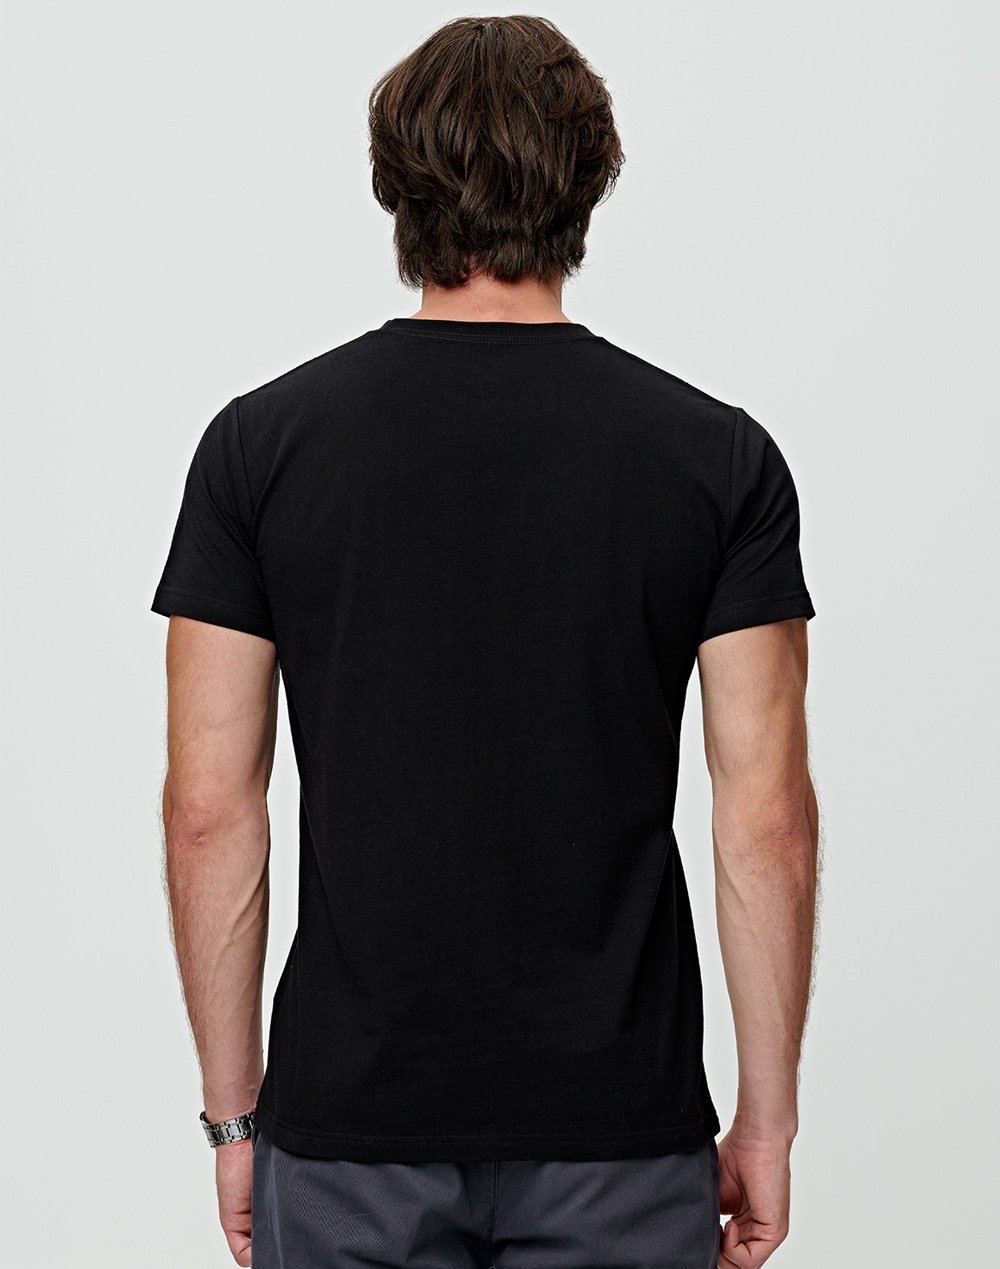 Custom Printed Premium T-Shirts Men's Double Needle Herms Online in Perth Australia